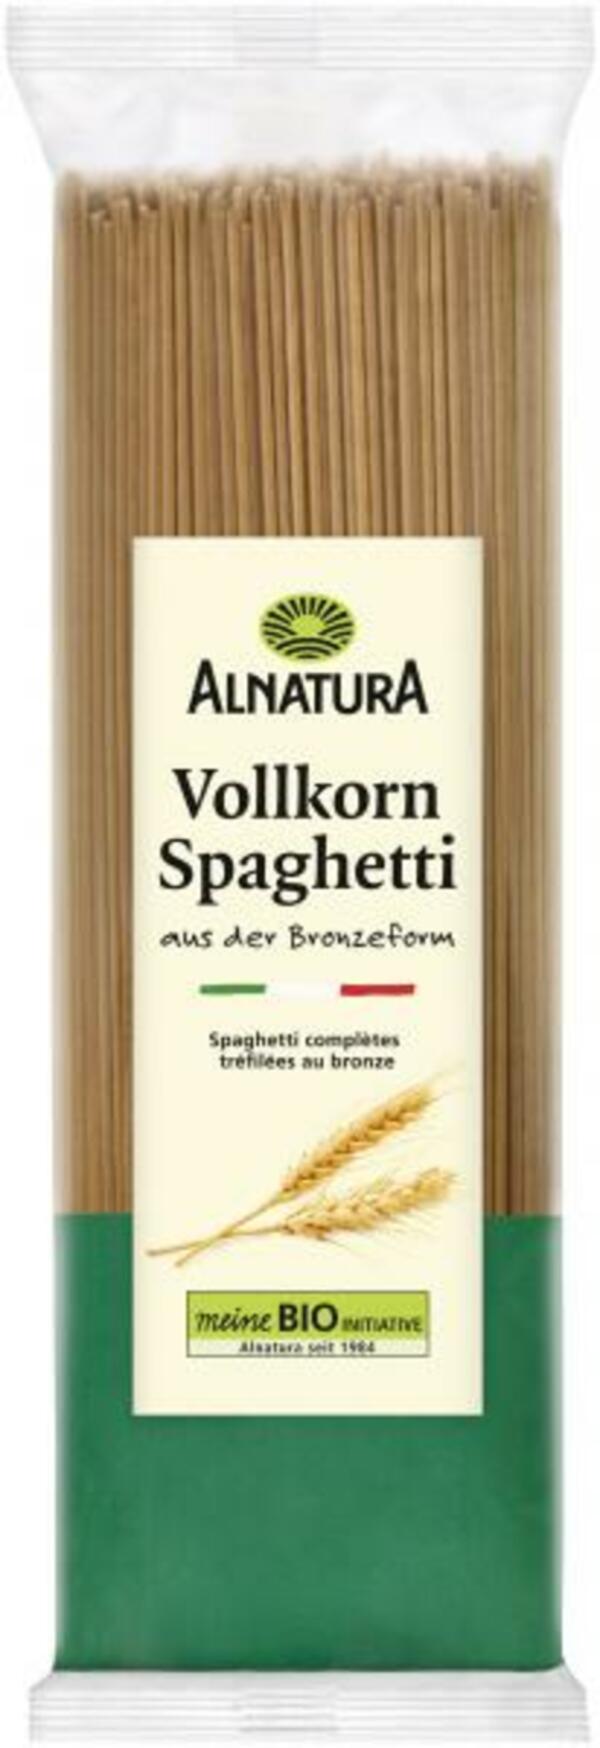 Bild 1 von Alnatura Vollkorn-Spaghetti